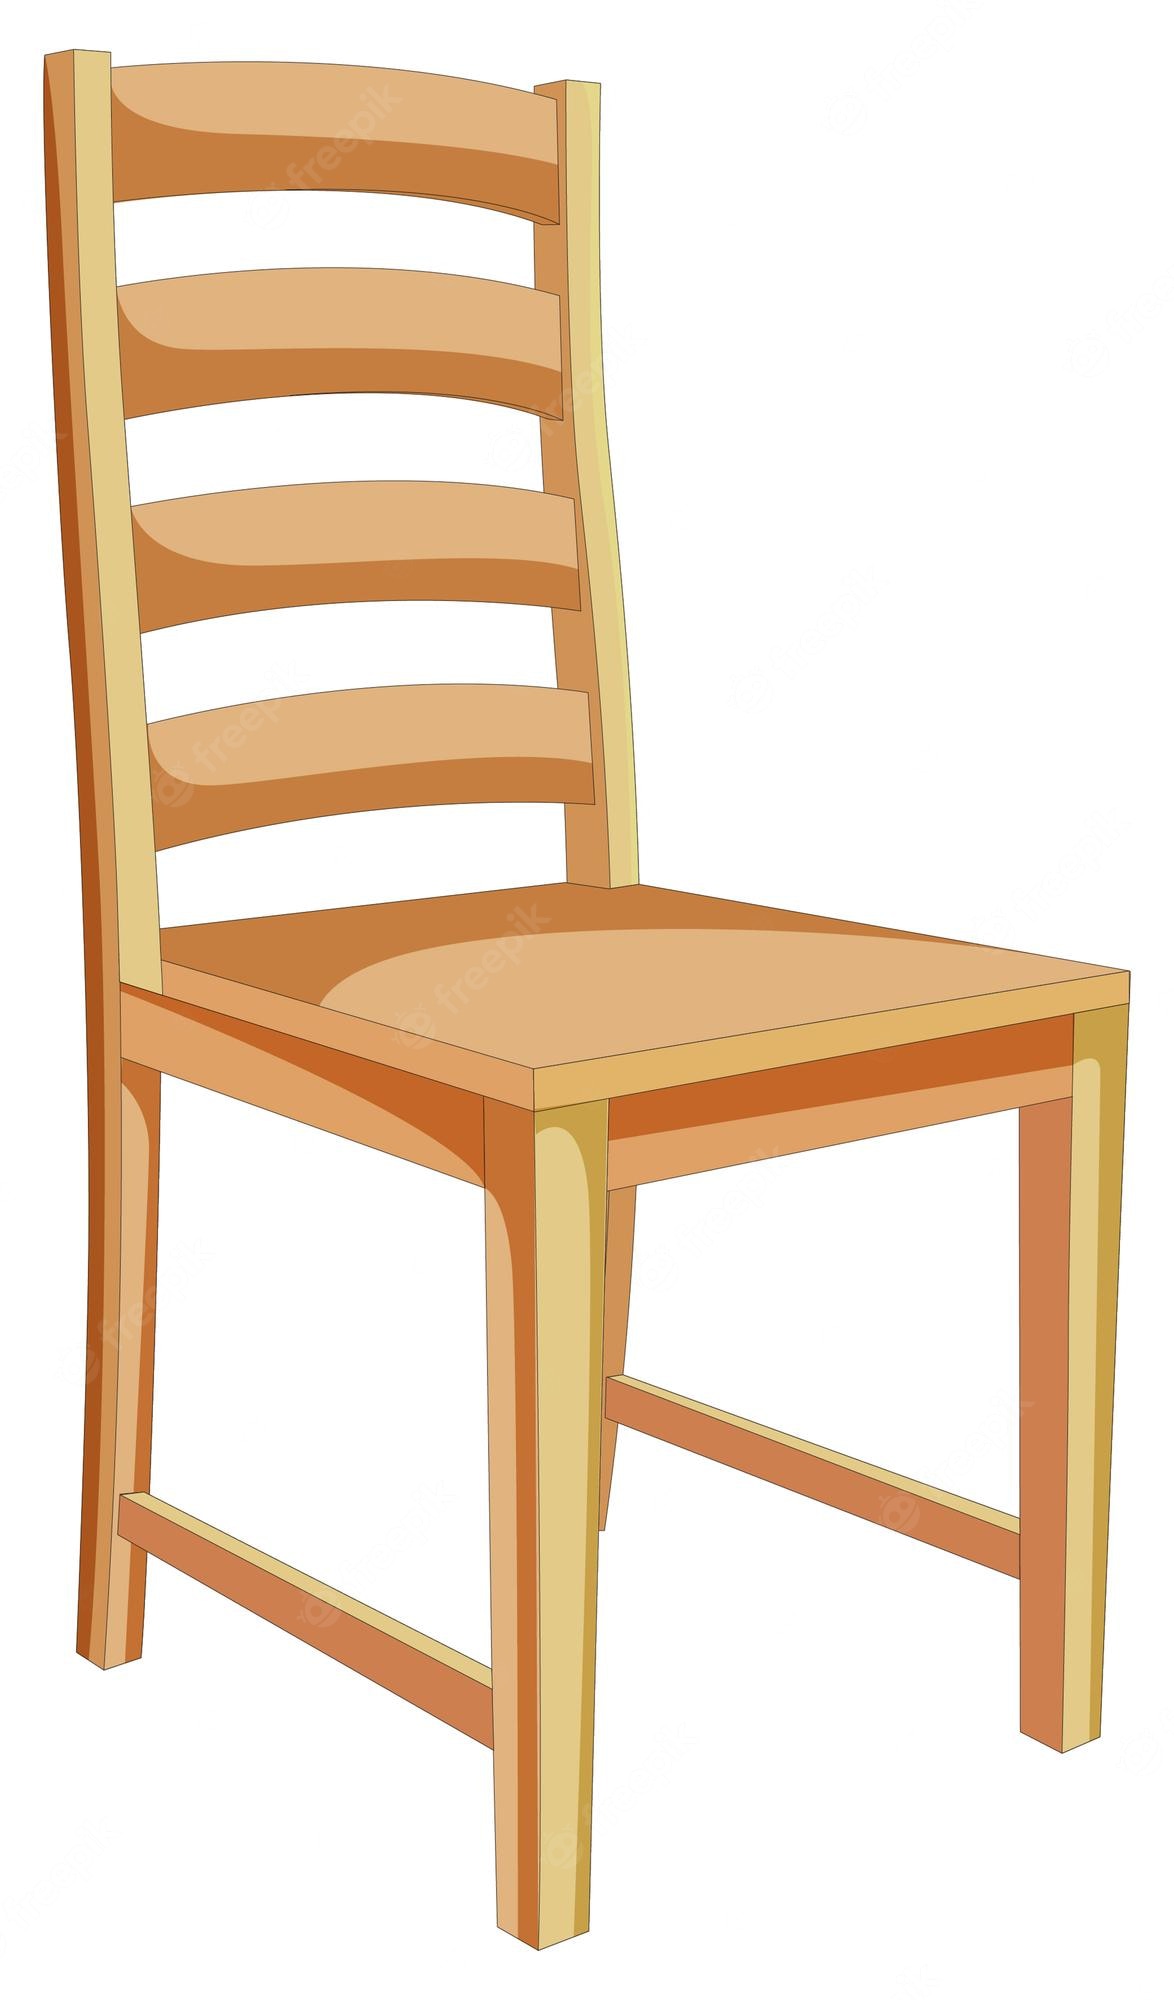 Wooden Chair 642458 769 